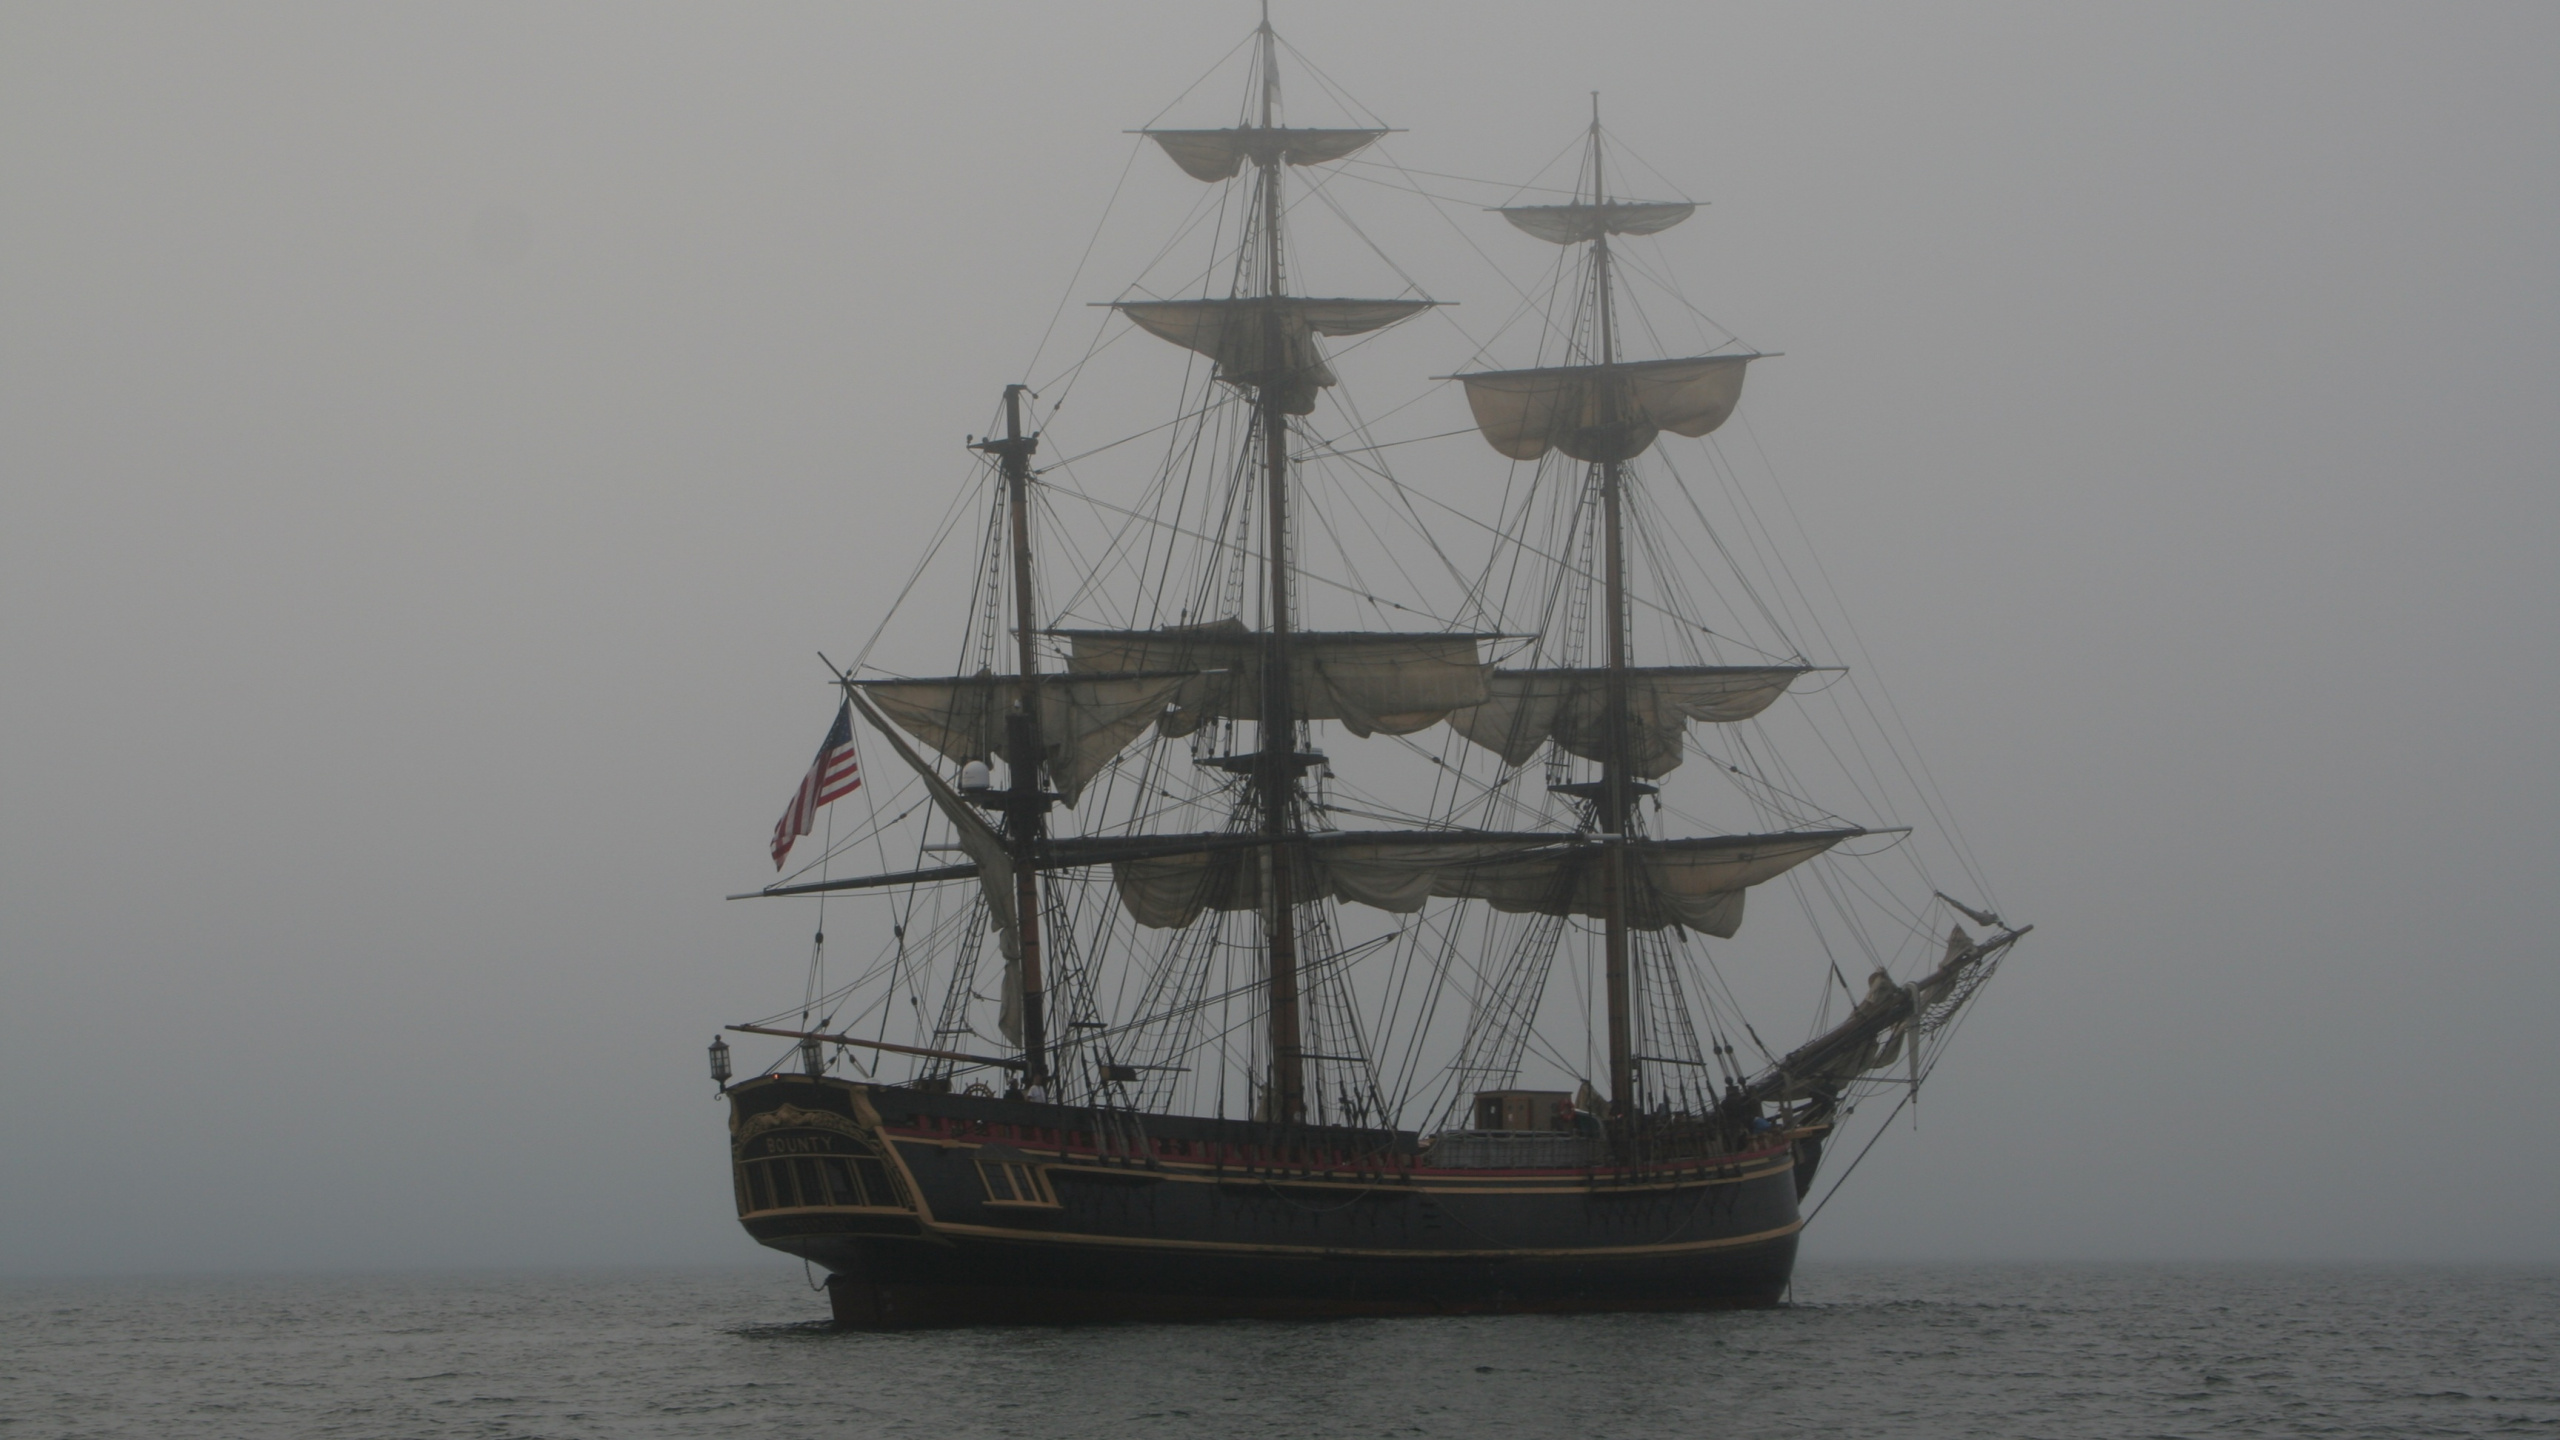 高船, 桅杆, 旗舰, Barquentine, 卡瑞克 壁纸 2560x1440 允许